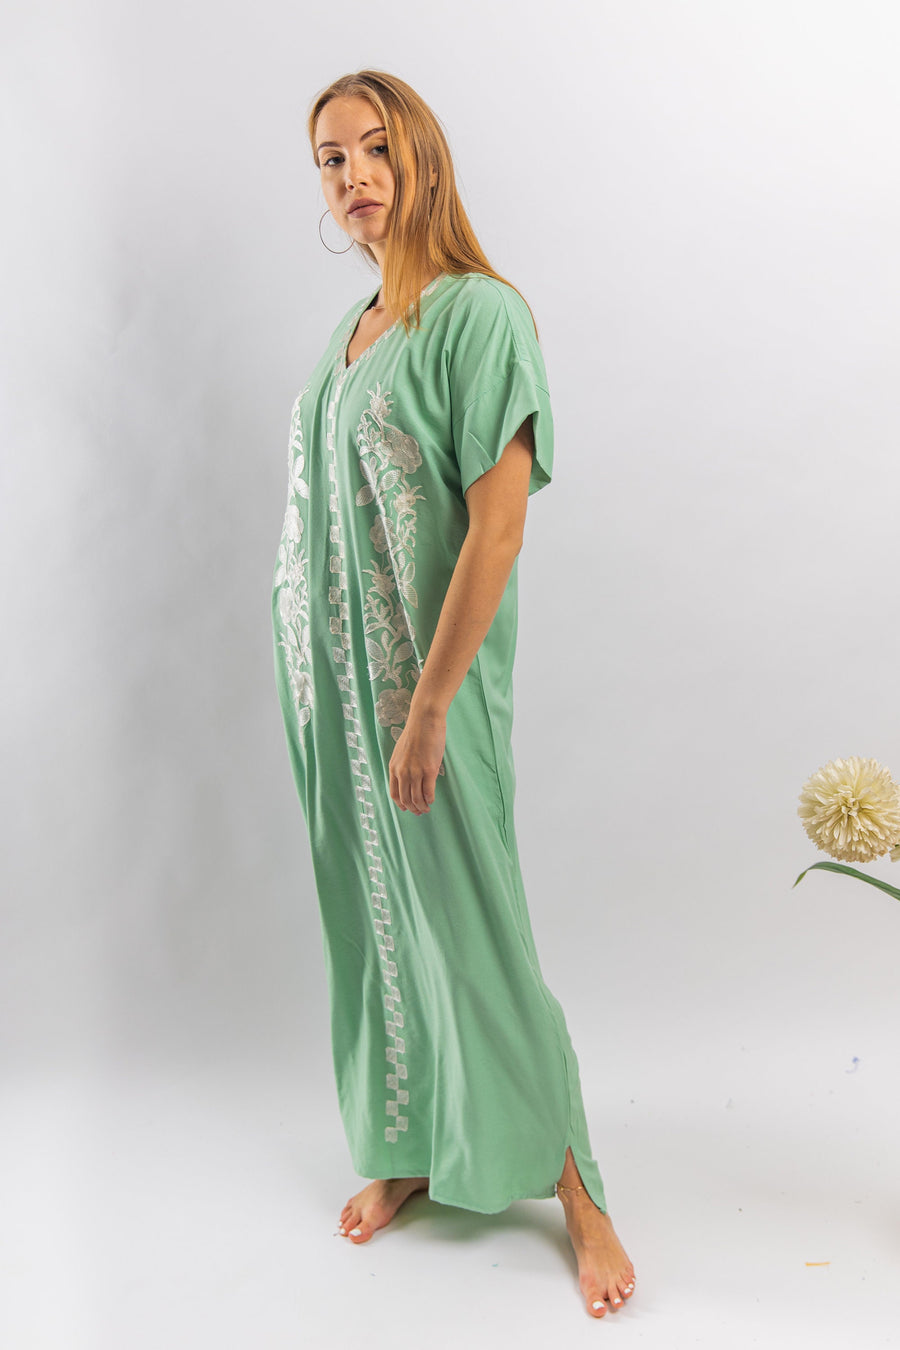 Elegant mint summer caftan, house dress, bohemian caftans for women, cute short sleeve kaftan, comfortable cotton Kaftan, Egyptian cotton